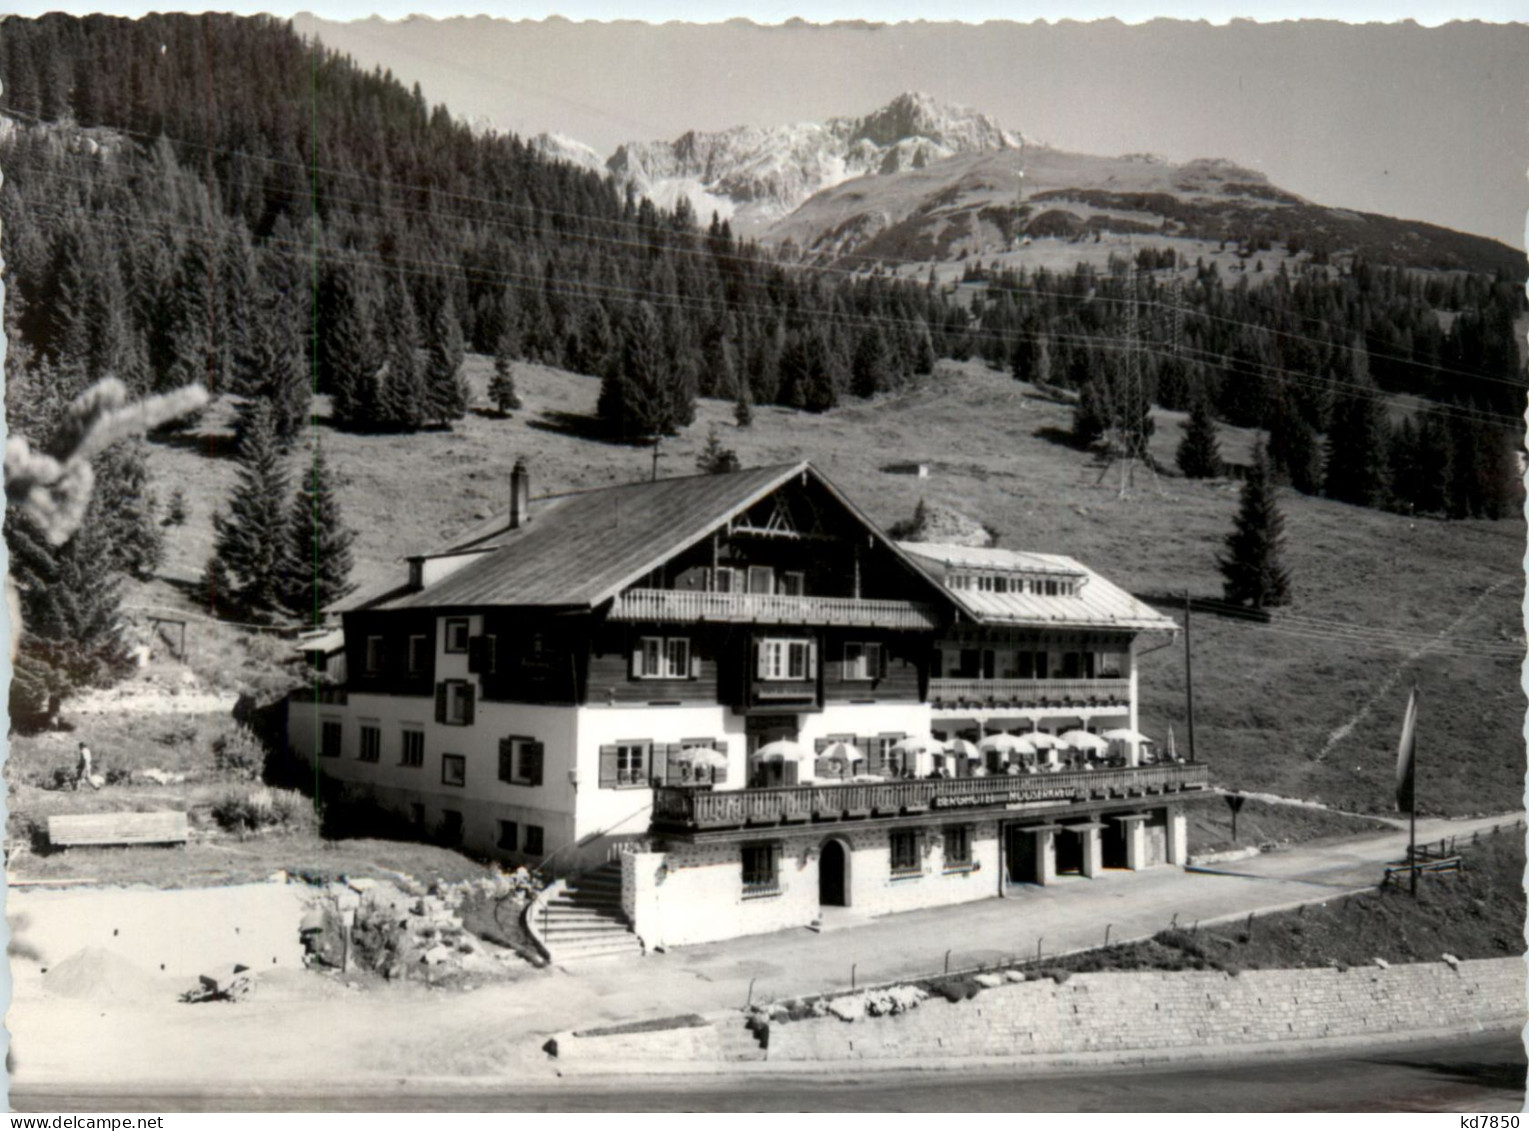 St. Anton Am Arlberg - Hotel Mooserkreuz - St. Anton Am Arlberg